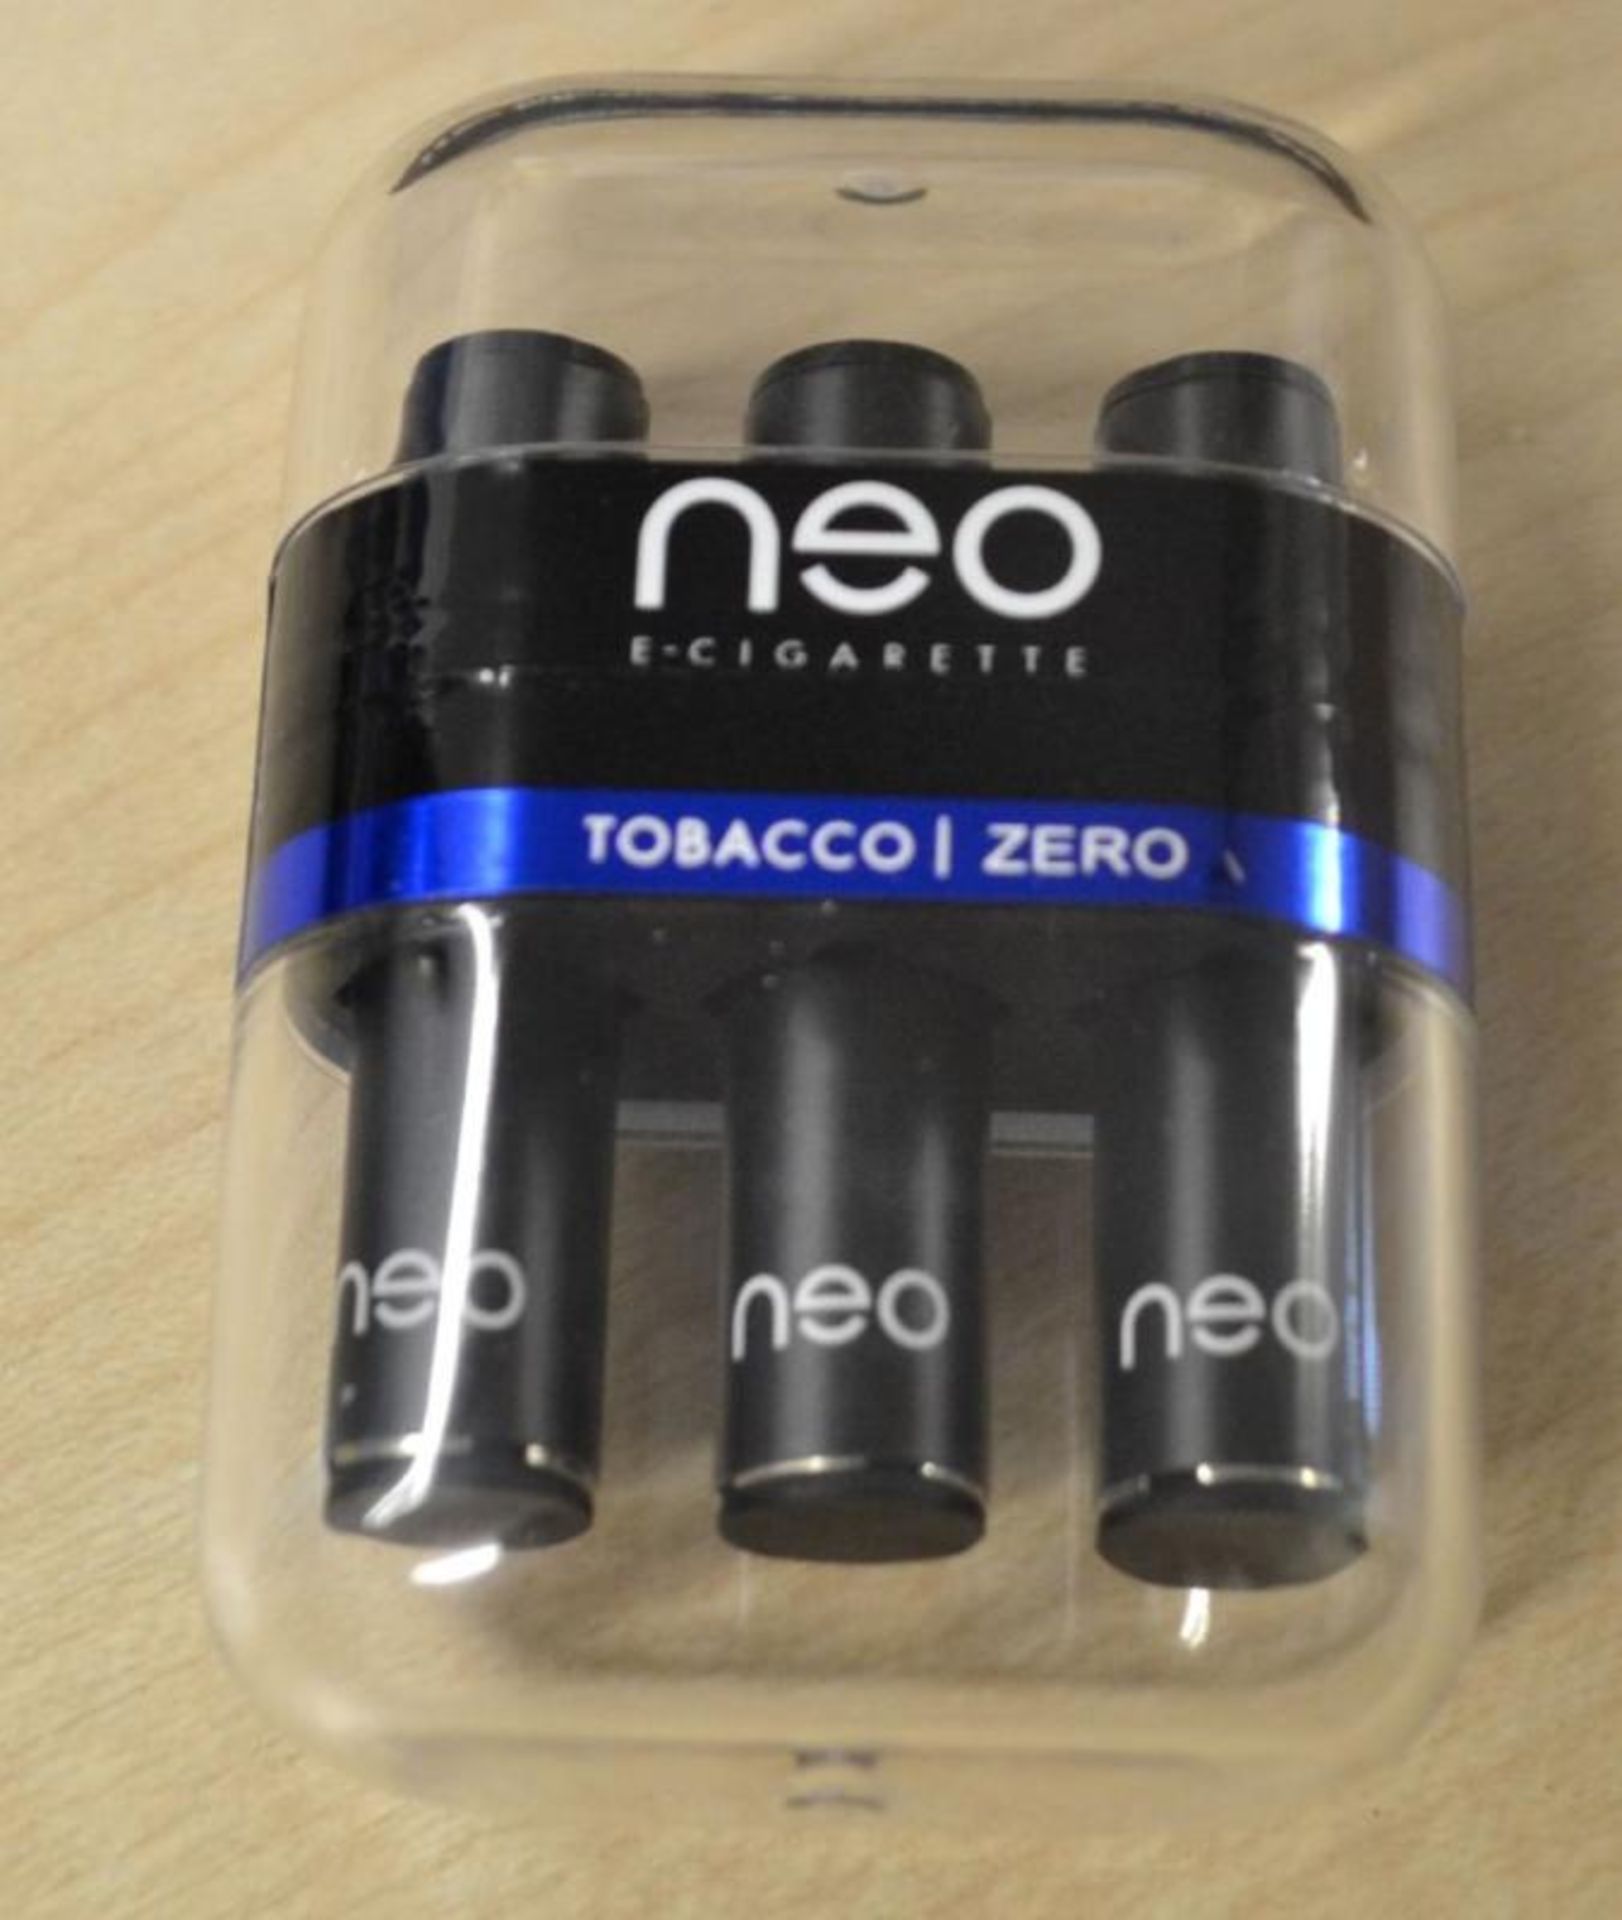 30 x Neo E-Cigarettes Neo Infinity Tobacco Zero Refill Packs - New & Sealed Stock - CL185 - Ref: - Image 5 of 9